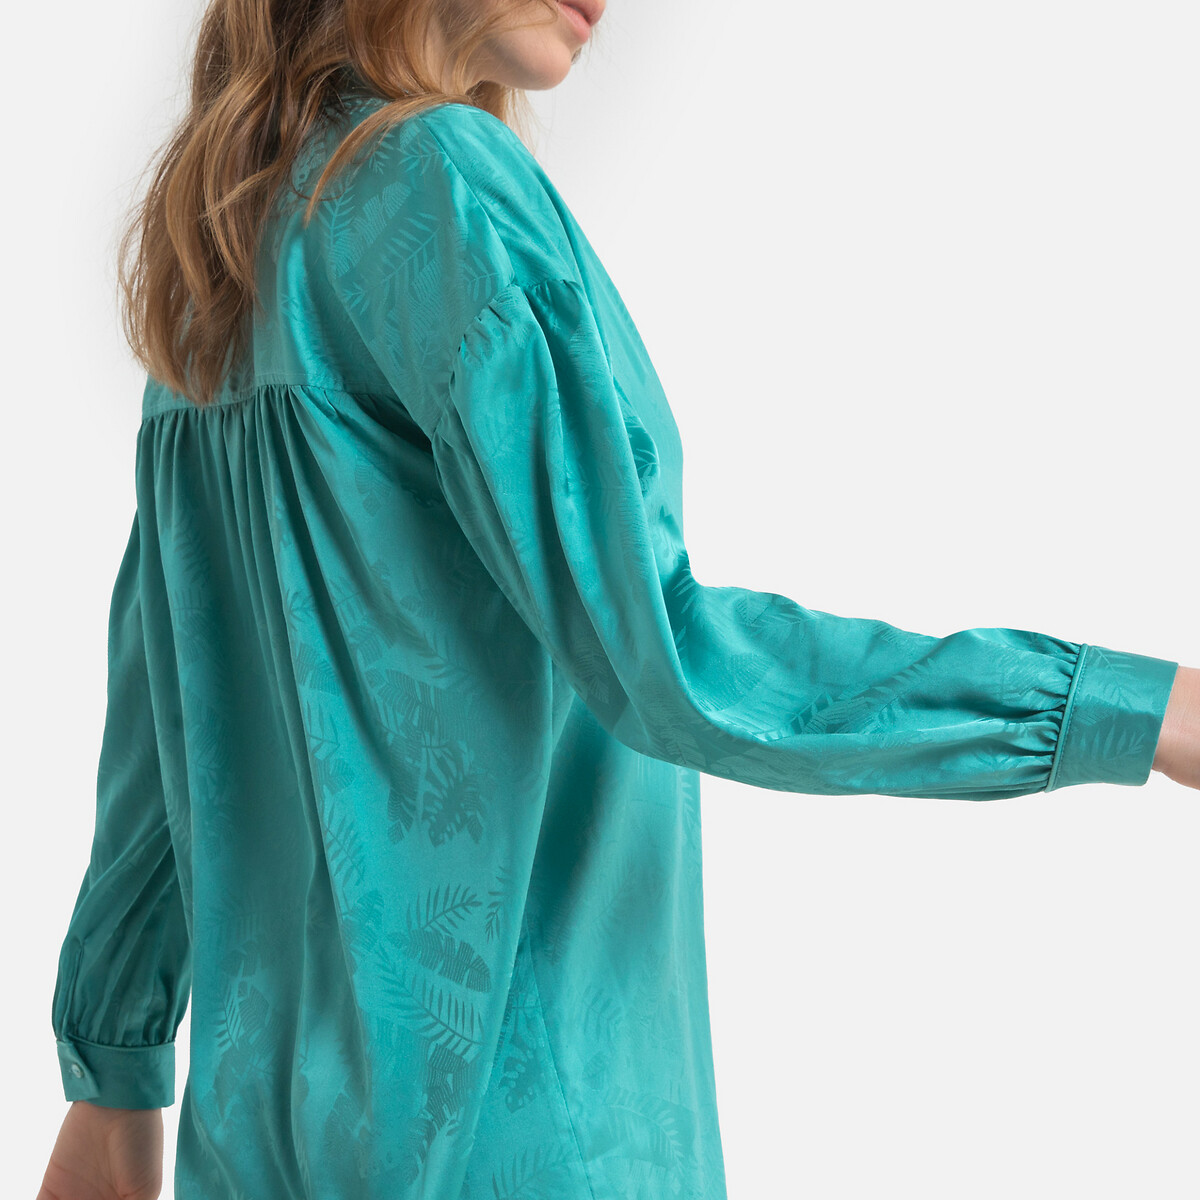 Ночная LaRedoute Рубашка в форме пижамы из сатина 44 (FR) - 50 (RUS) зеленый, размер 44 (FR) - 50 (RUS) Рубашка в форме пижамы из сатина 44 (FR) - 50 (RUS) зеленый - фото 3